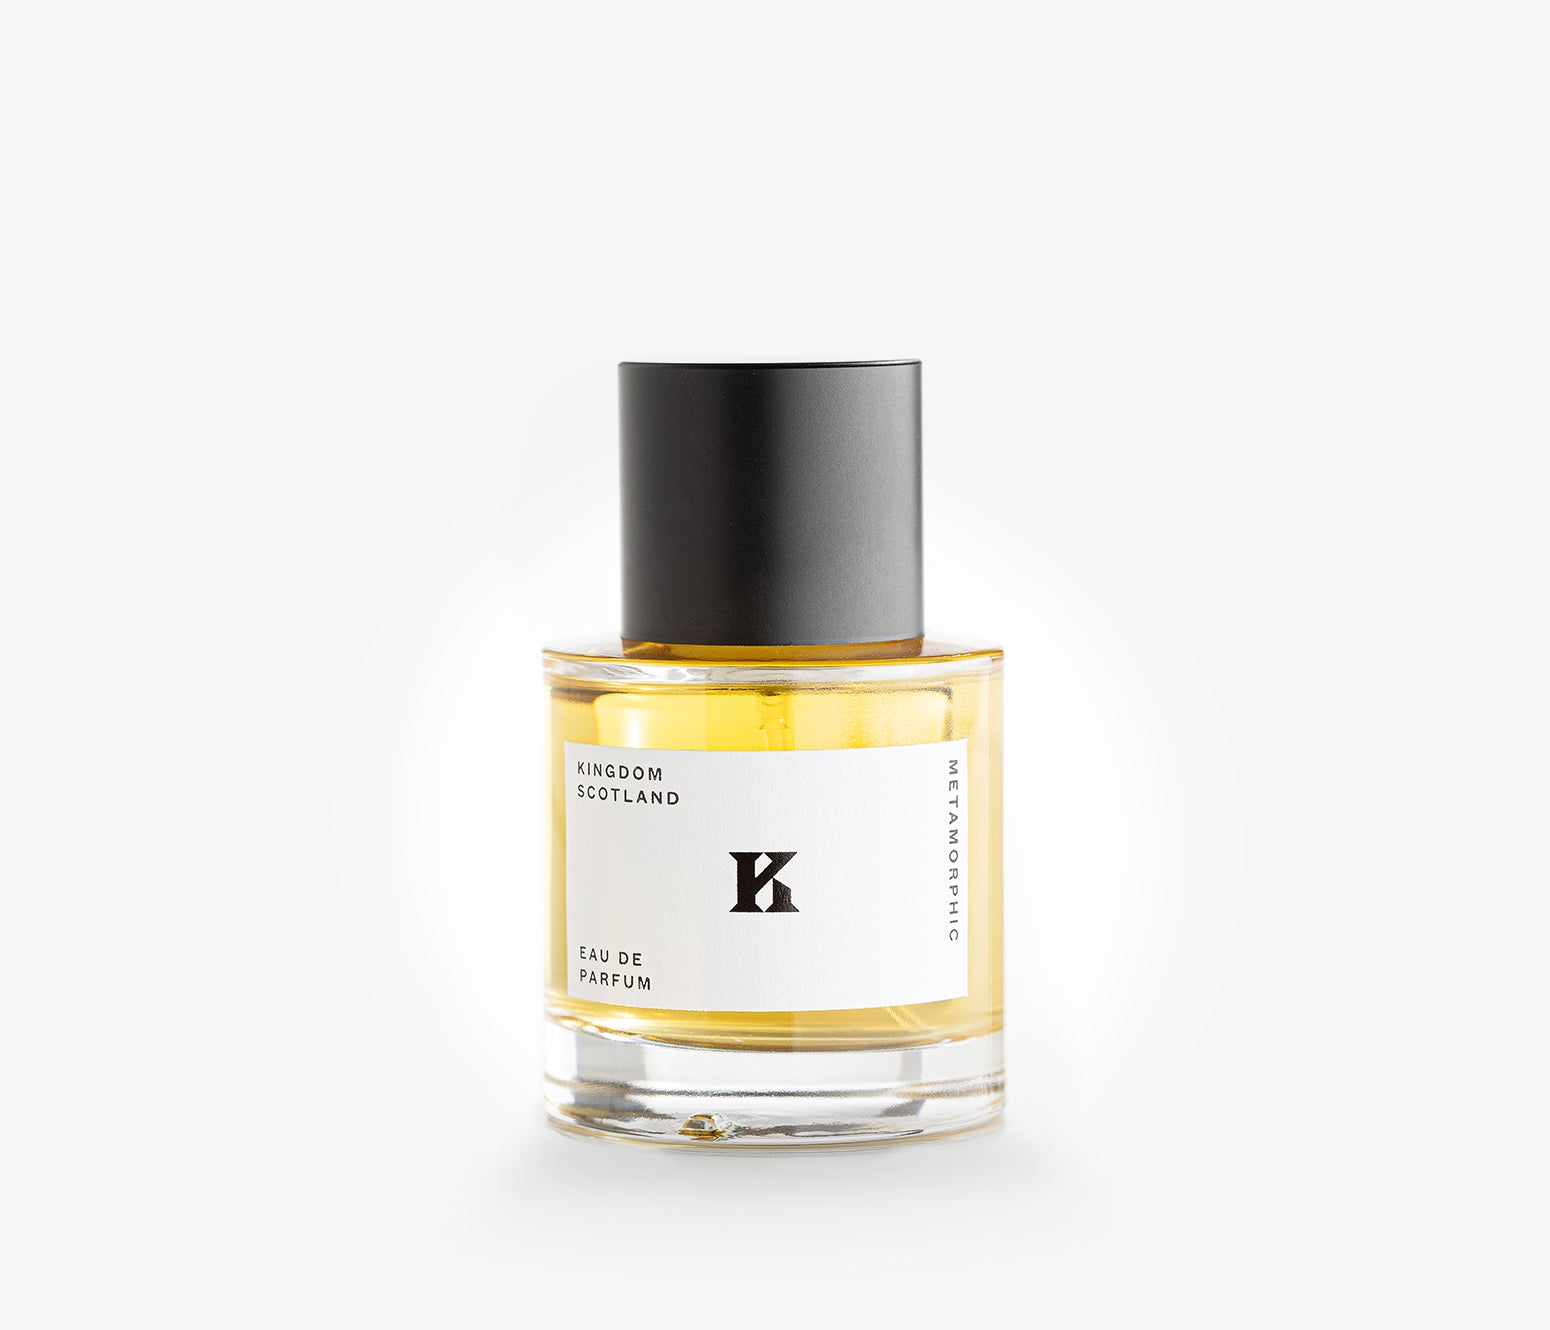 Kingdom Scotland - Metamorphic - 50ml - KHK001 - product image - Fragrance - Les Senteurs